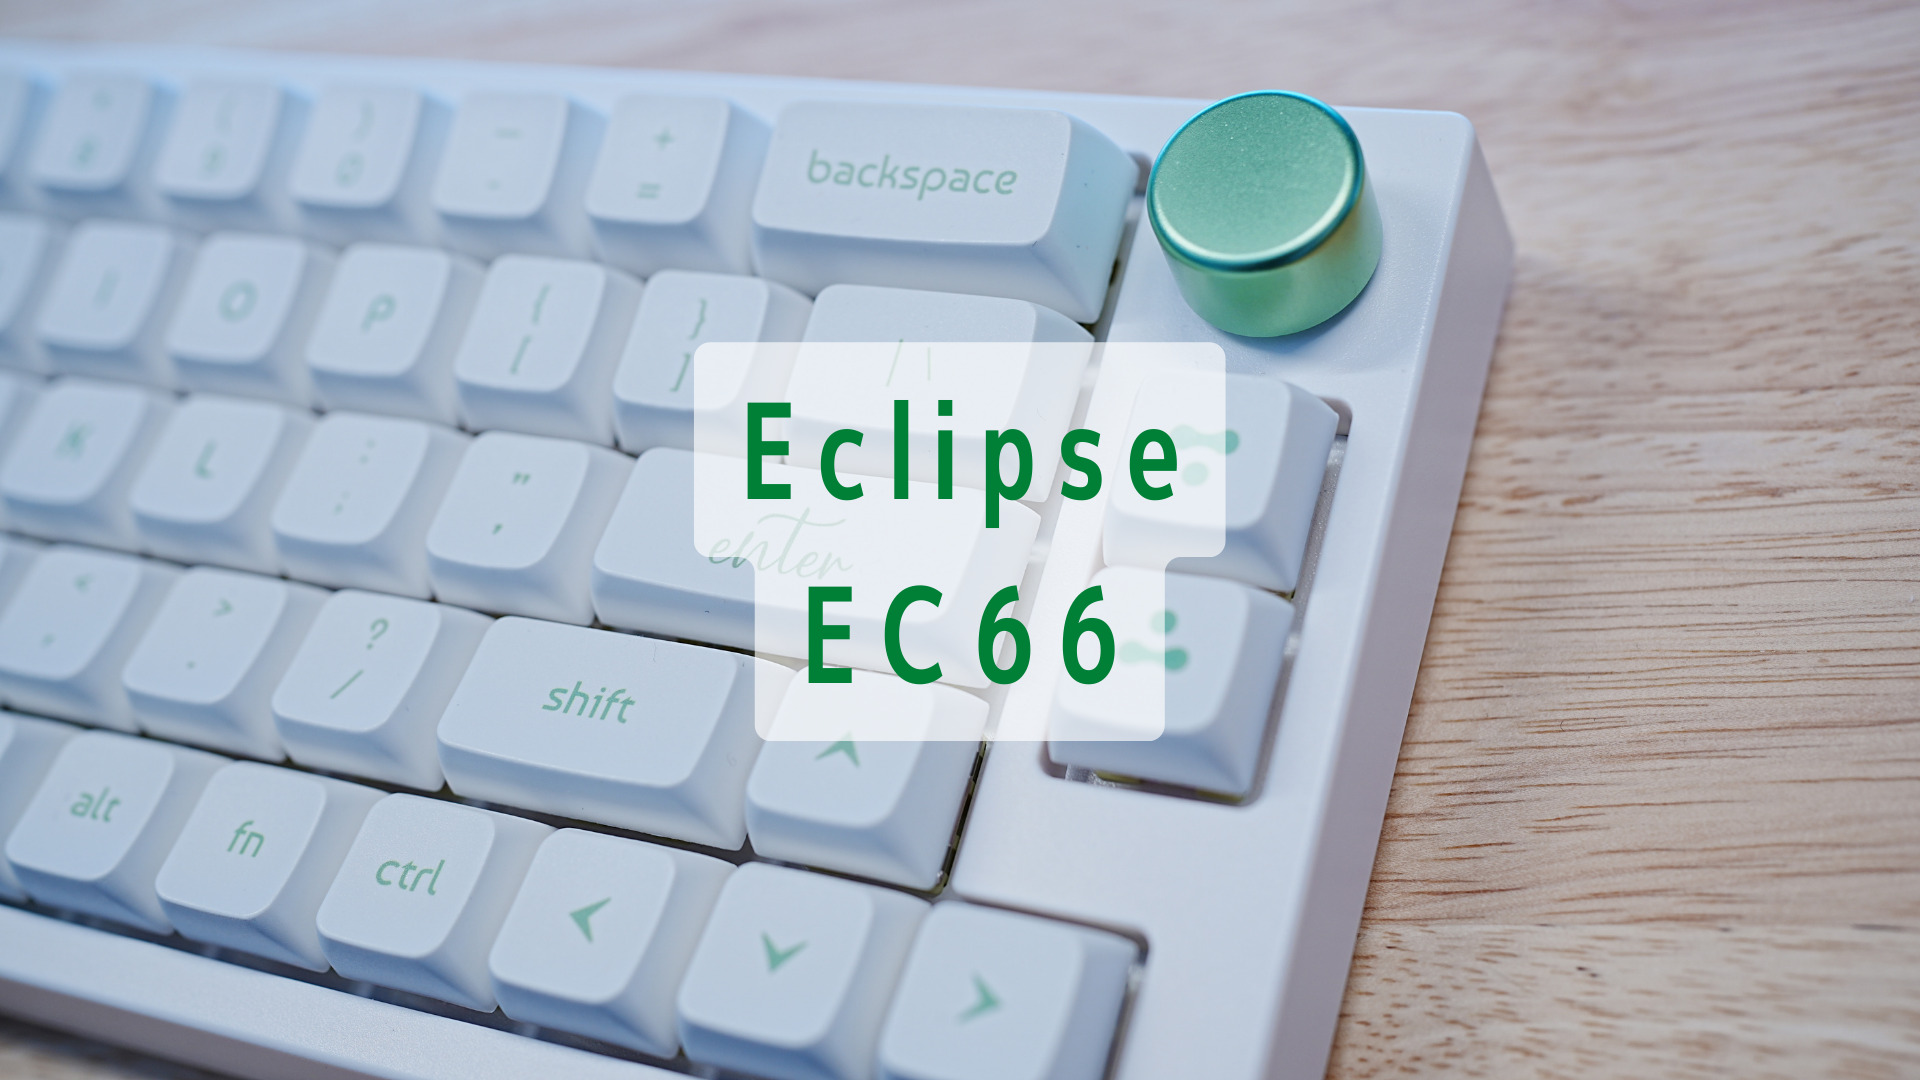 Eclipse EC66